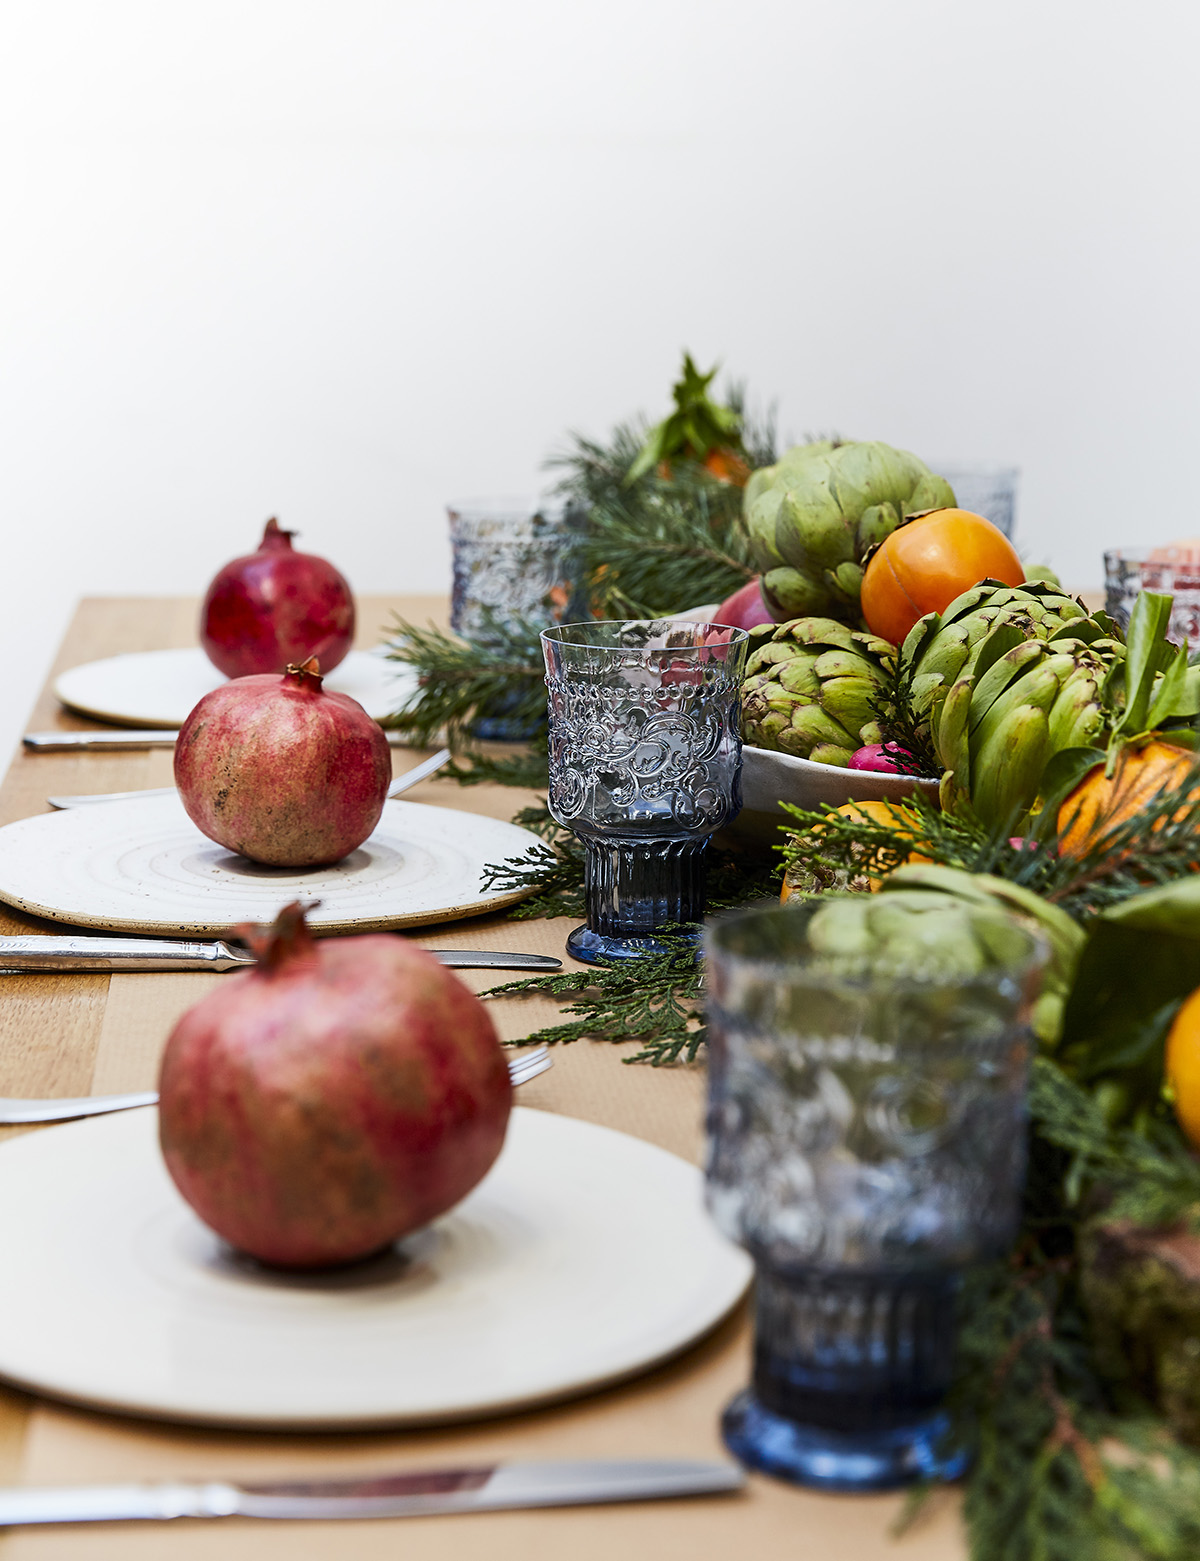 Colourful Christmas table using fresh produce